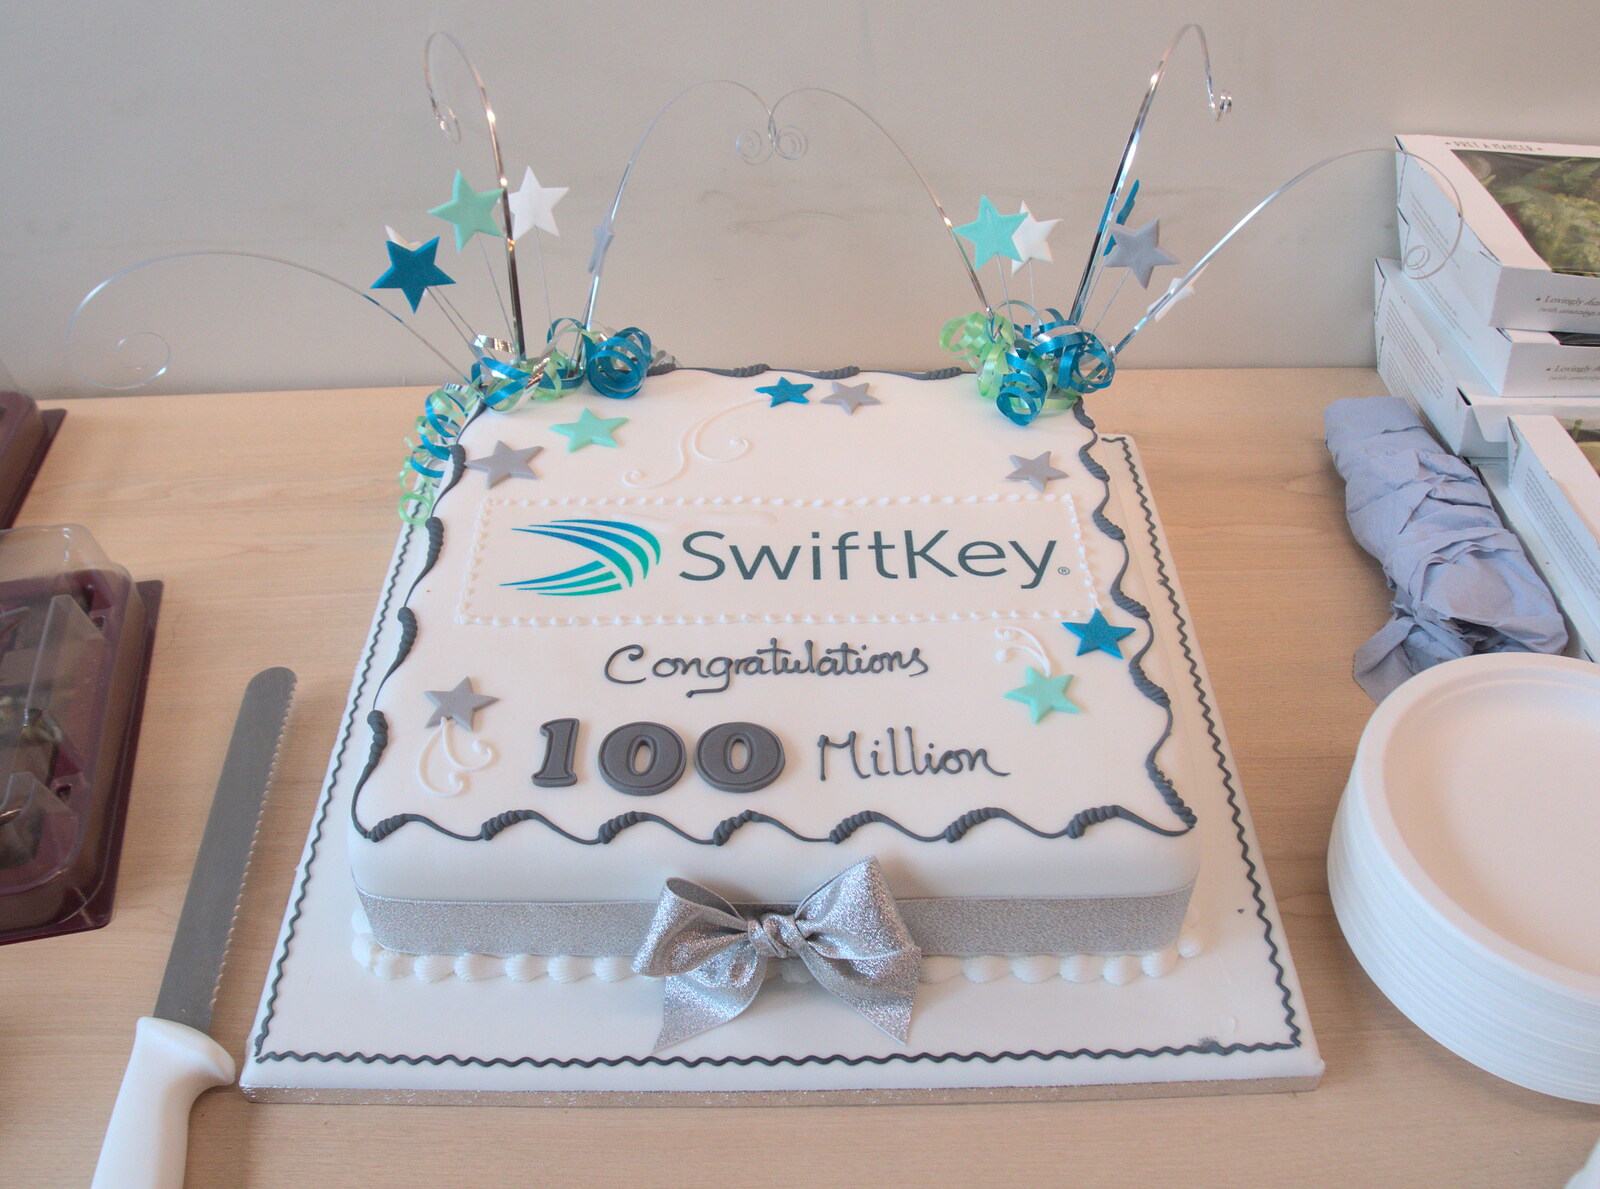 SwiftKey's 100 million cake from SwiftKey's Hundred Million, Paddington, London - 13th June 2018